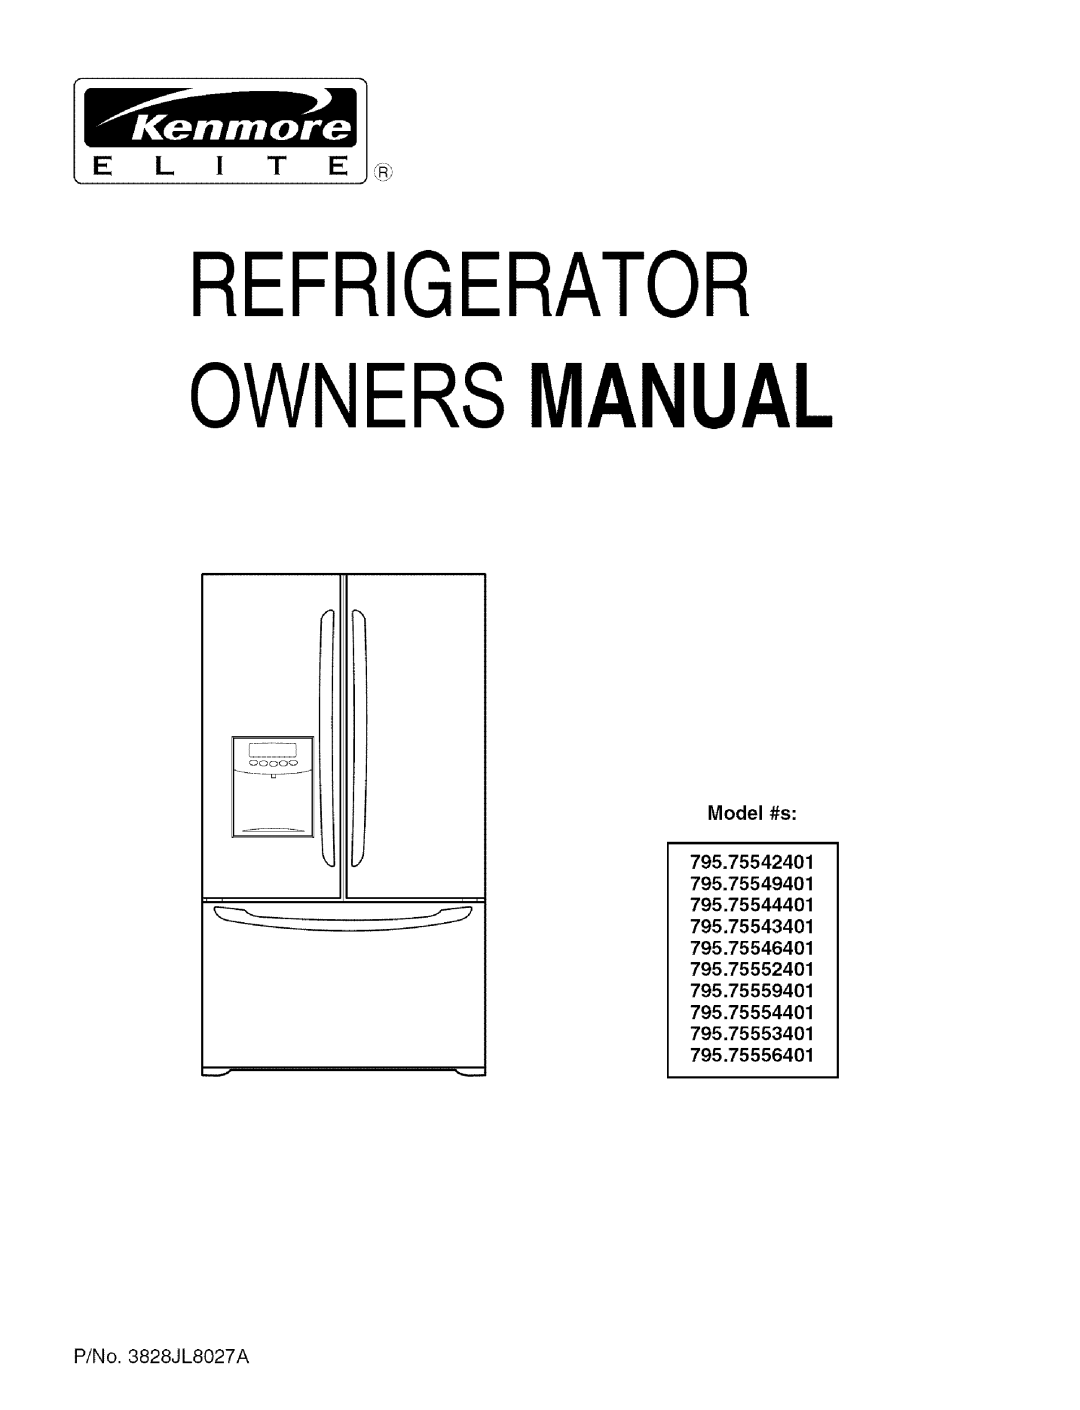 Kenmore 795.755544 owner manual E, Model #s, 795.75543401, 795.75559401, 795.75556401, Refrigerator Ownersmanual, ooooo 